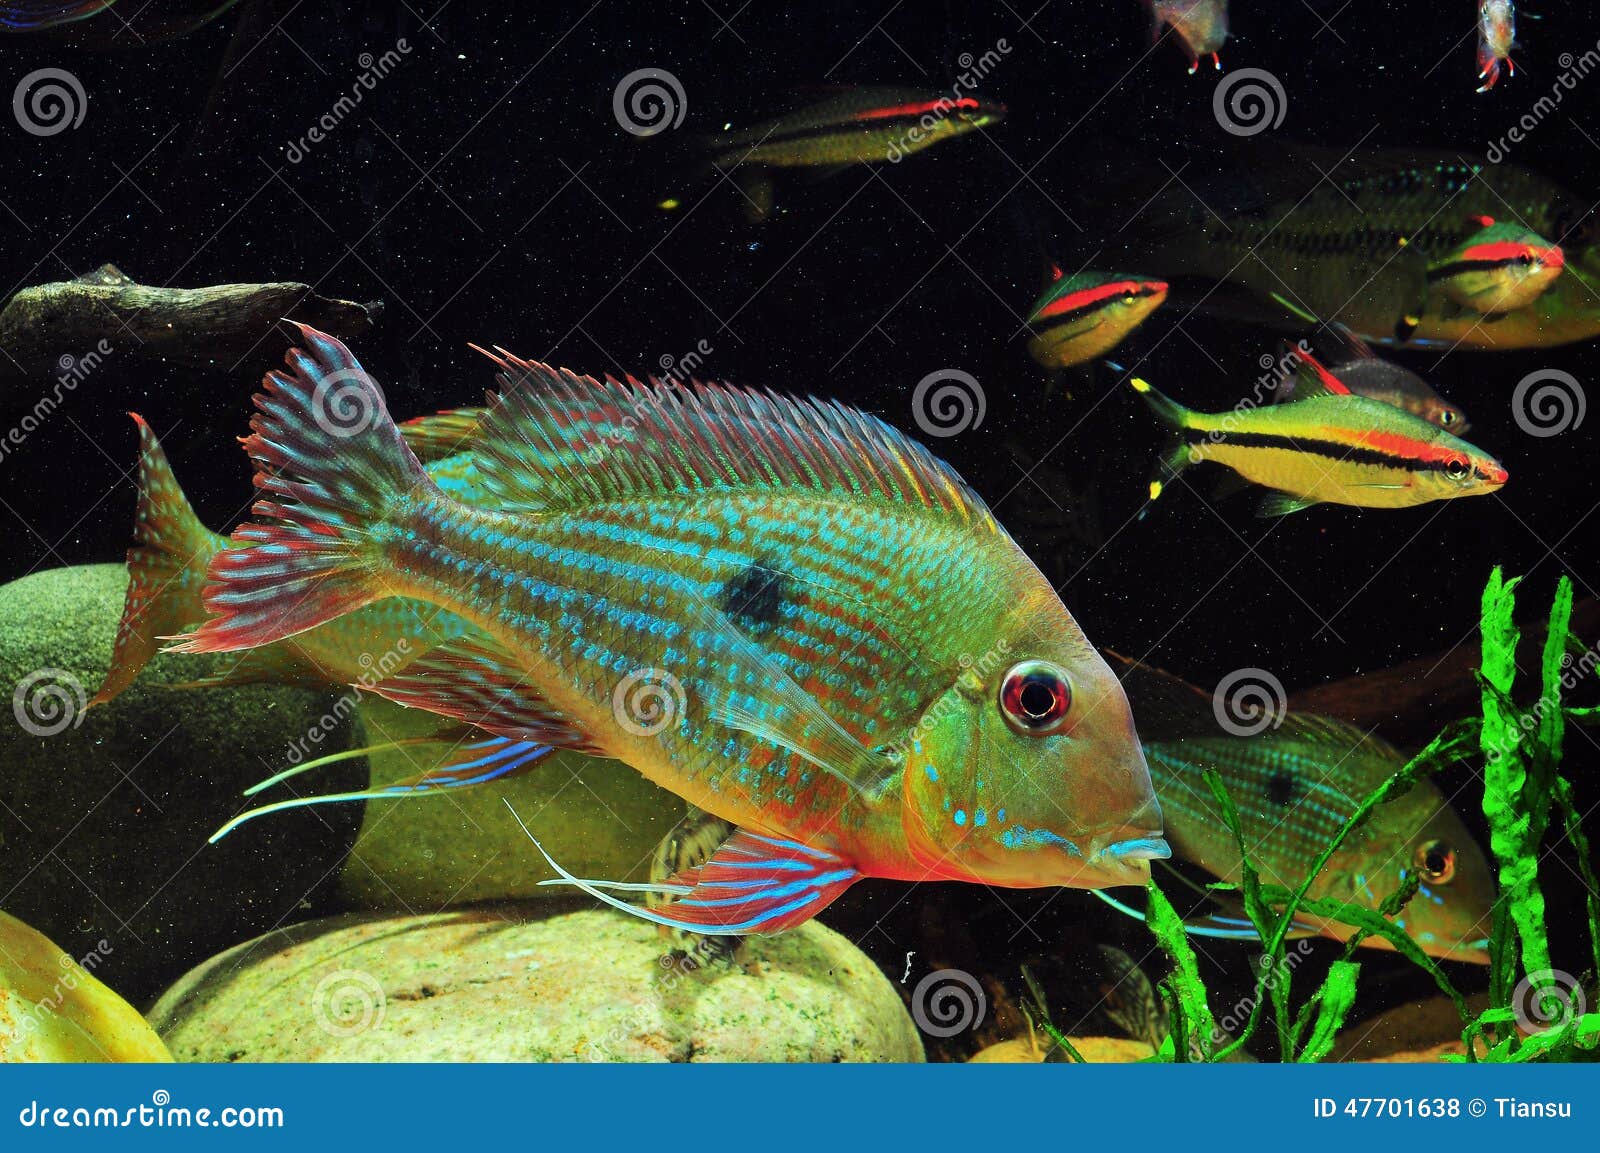 amazon tropical fish